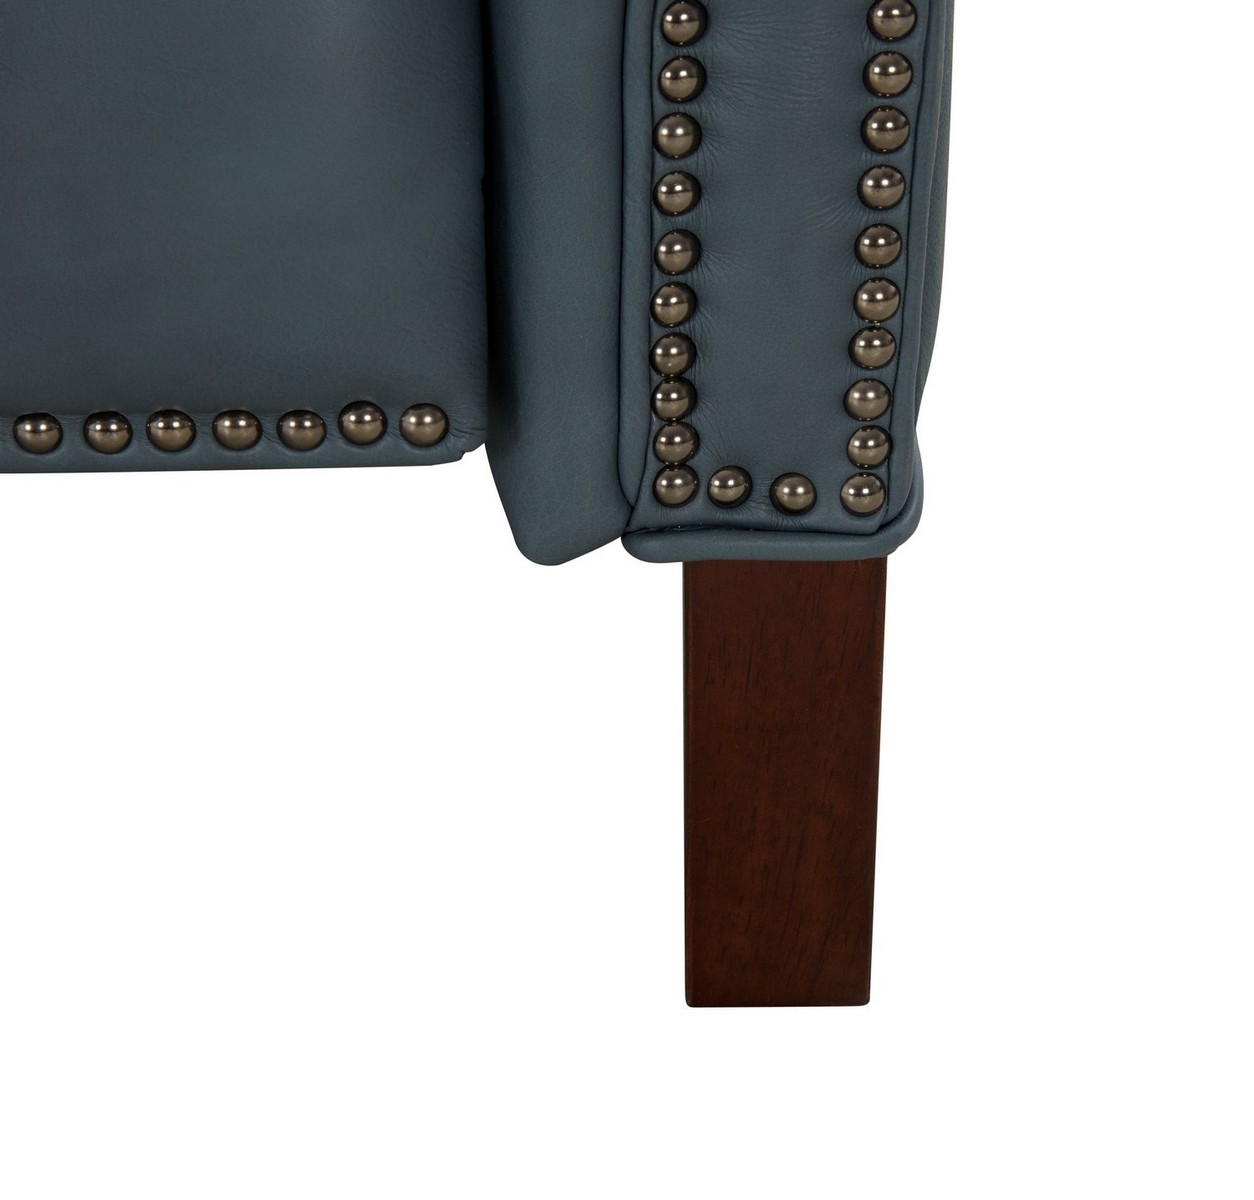 Barcalounger Thornfield Recliner Chair - Corbett Steel Gray/All Leather